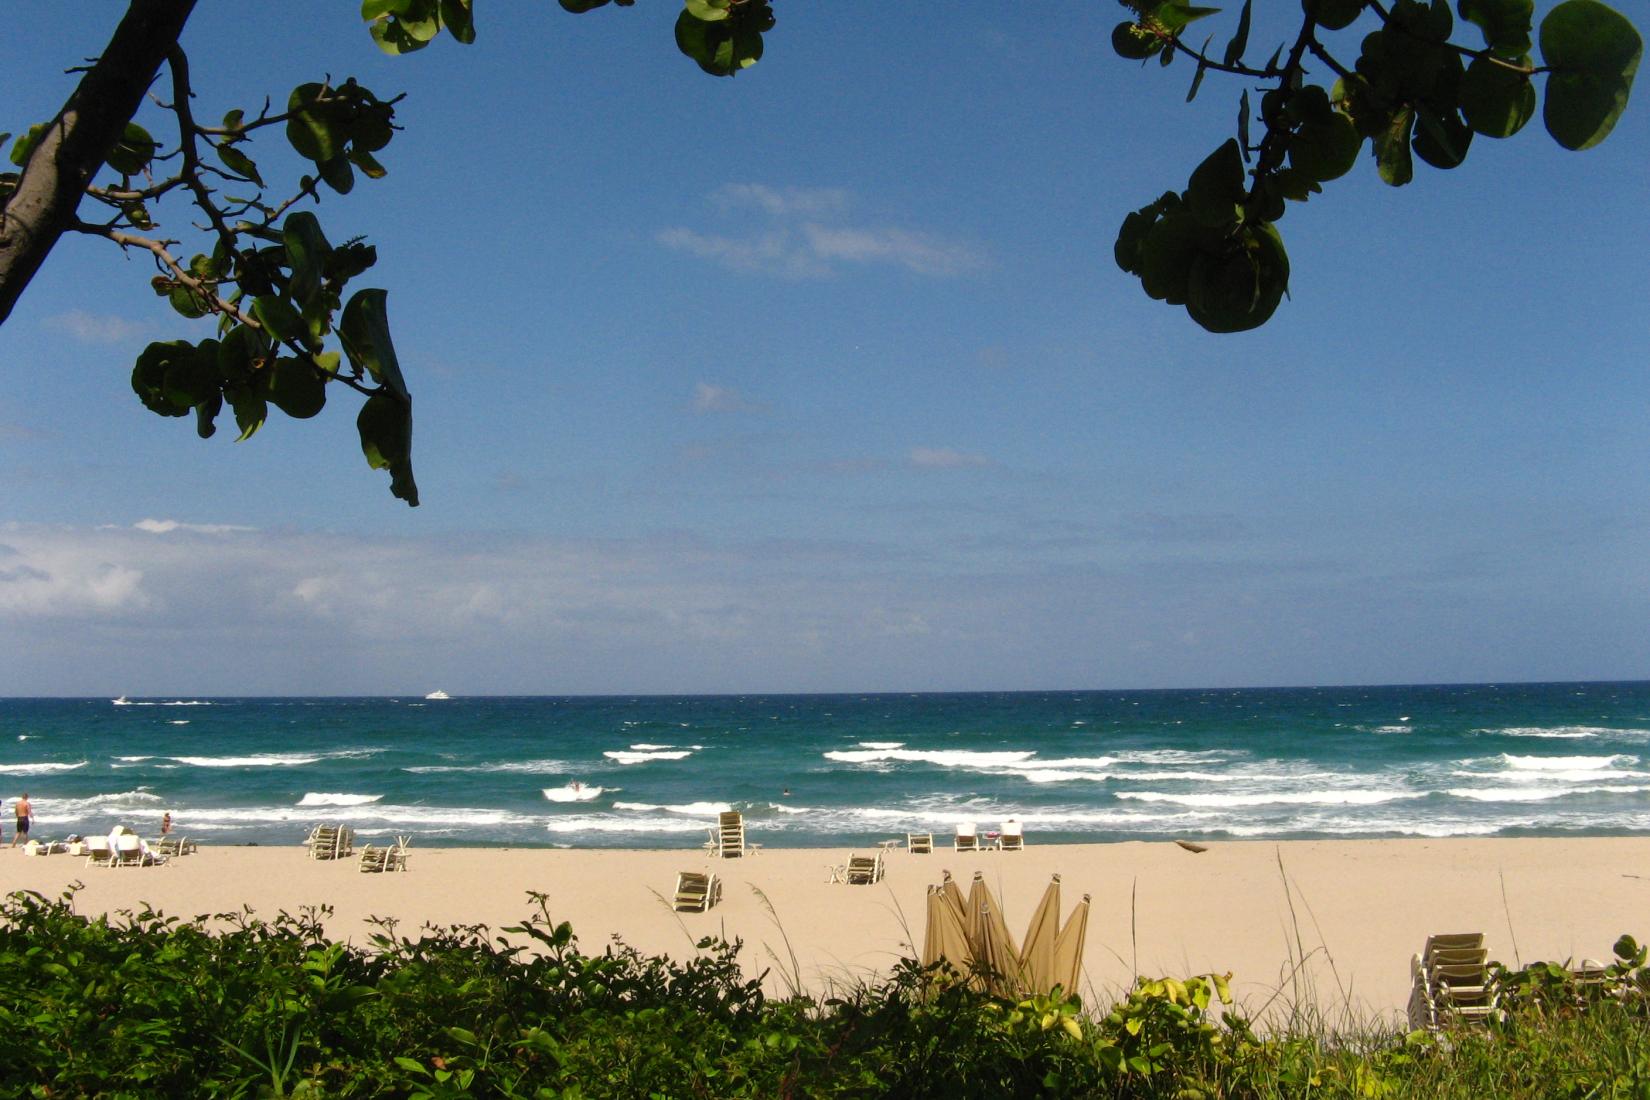 Sandee - Palm Beach Shores